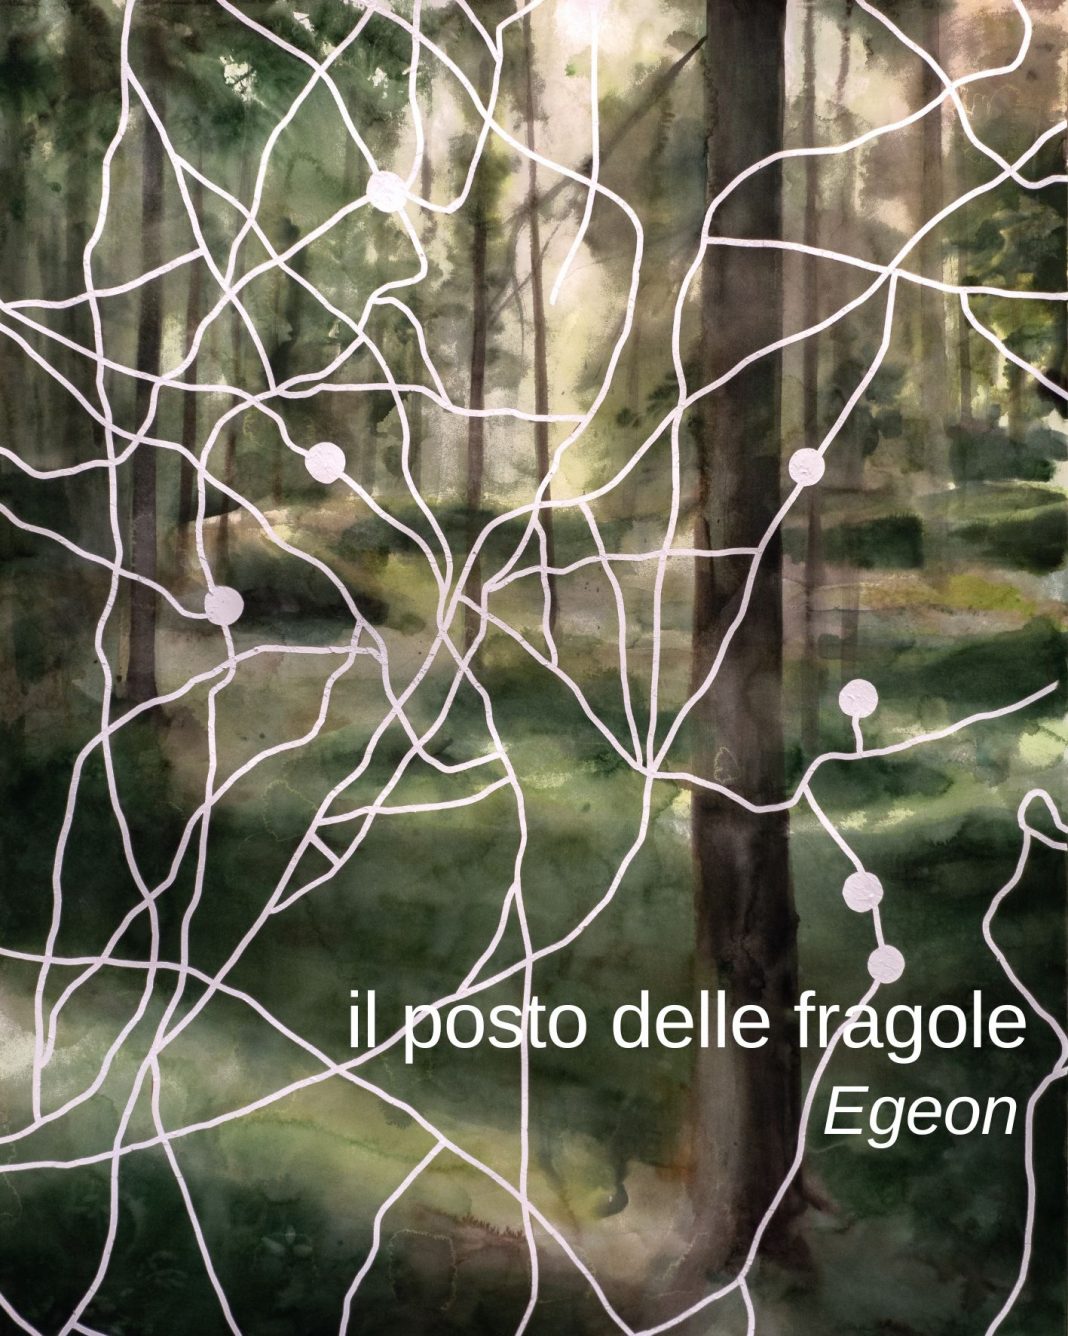 EGEON – IL POSTO DELLE FRAGOLEhttps://www.exibart.com/repository/media/formidable/11/img/1d8/OPENING-IL-POSTO-DELLE-FRAGOLE-EGEON-1068x1336.jpg